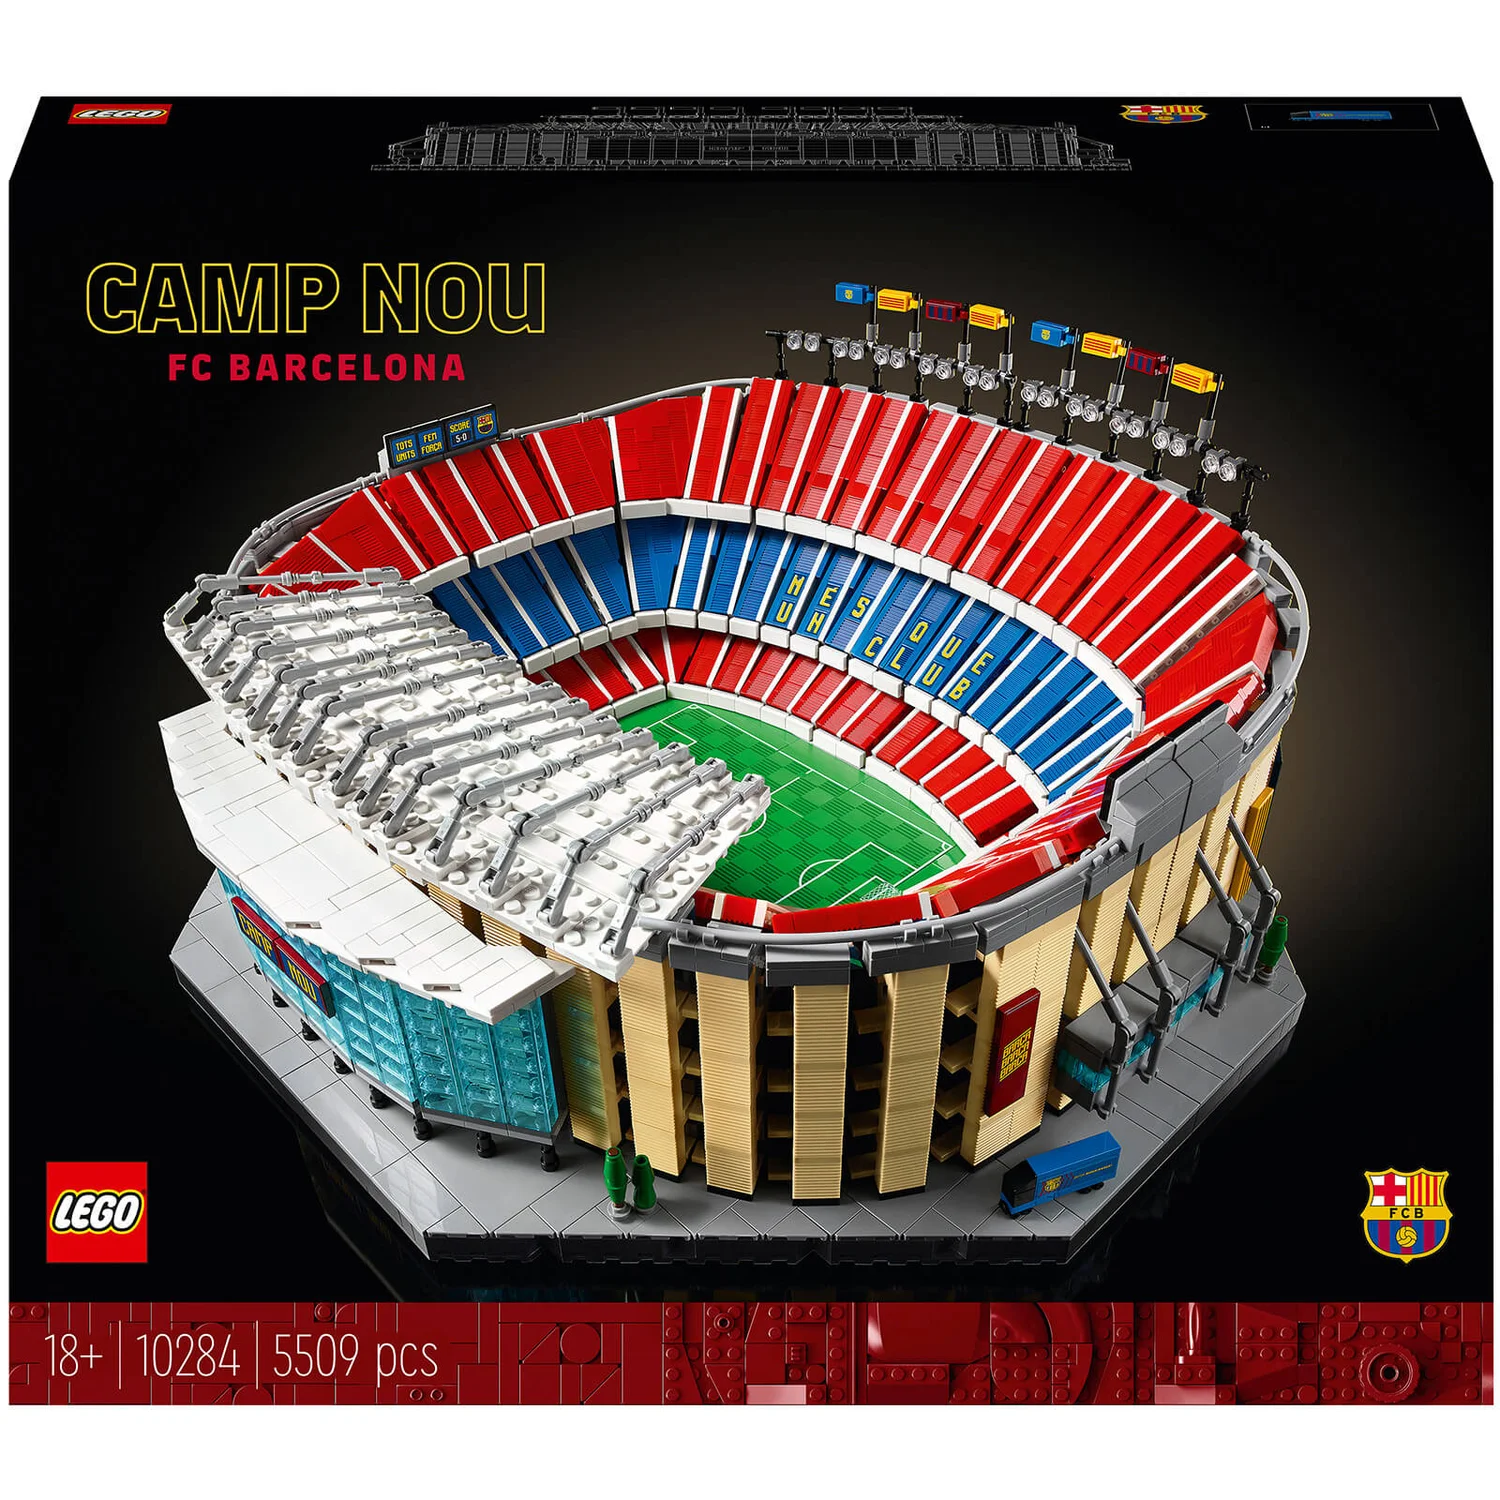 5509-Piece LEGO Camp Nou FC Barcelona Football Set (10284)